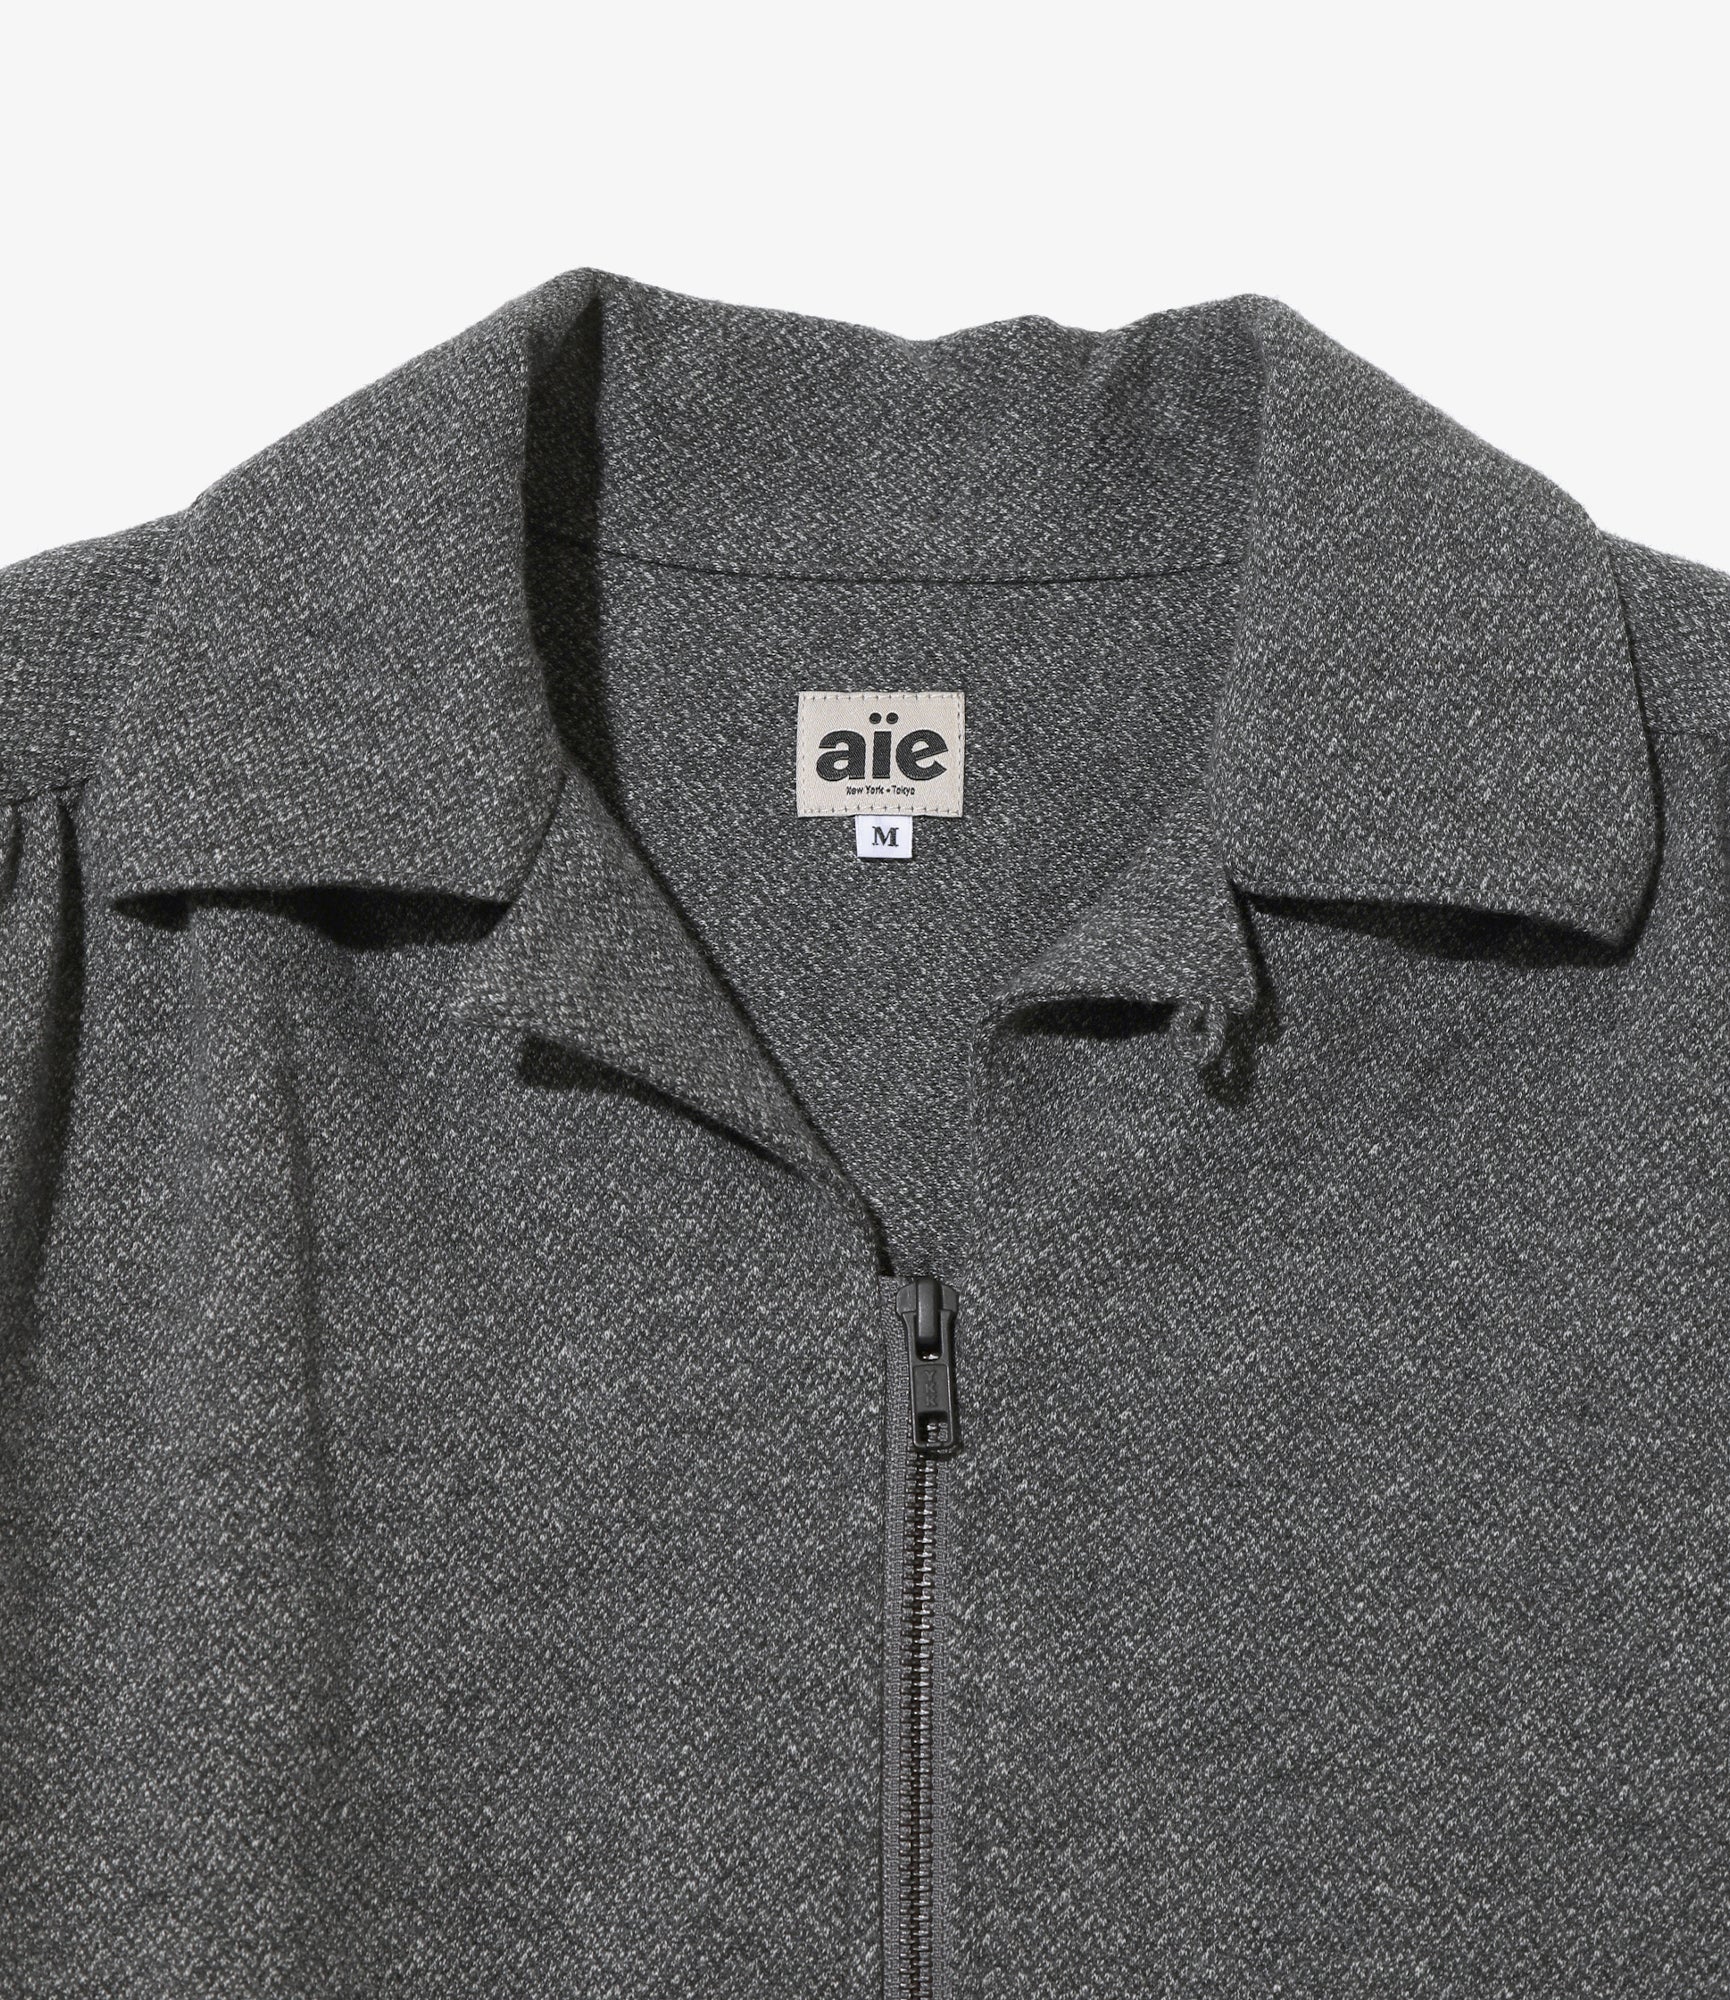 AiE Z Painter Shirt - W/C Jersey / Herringbone - Grey